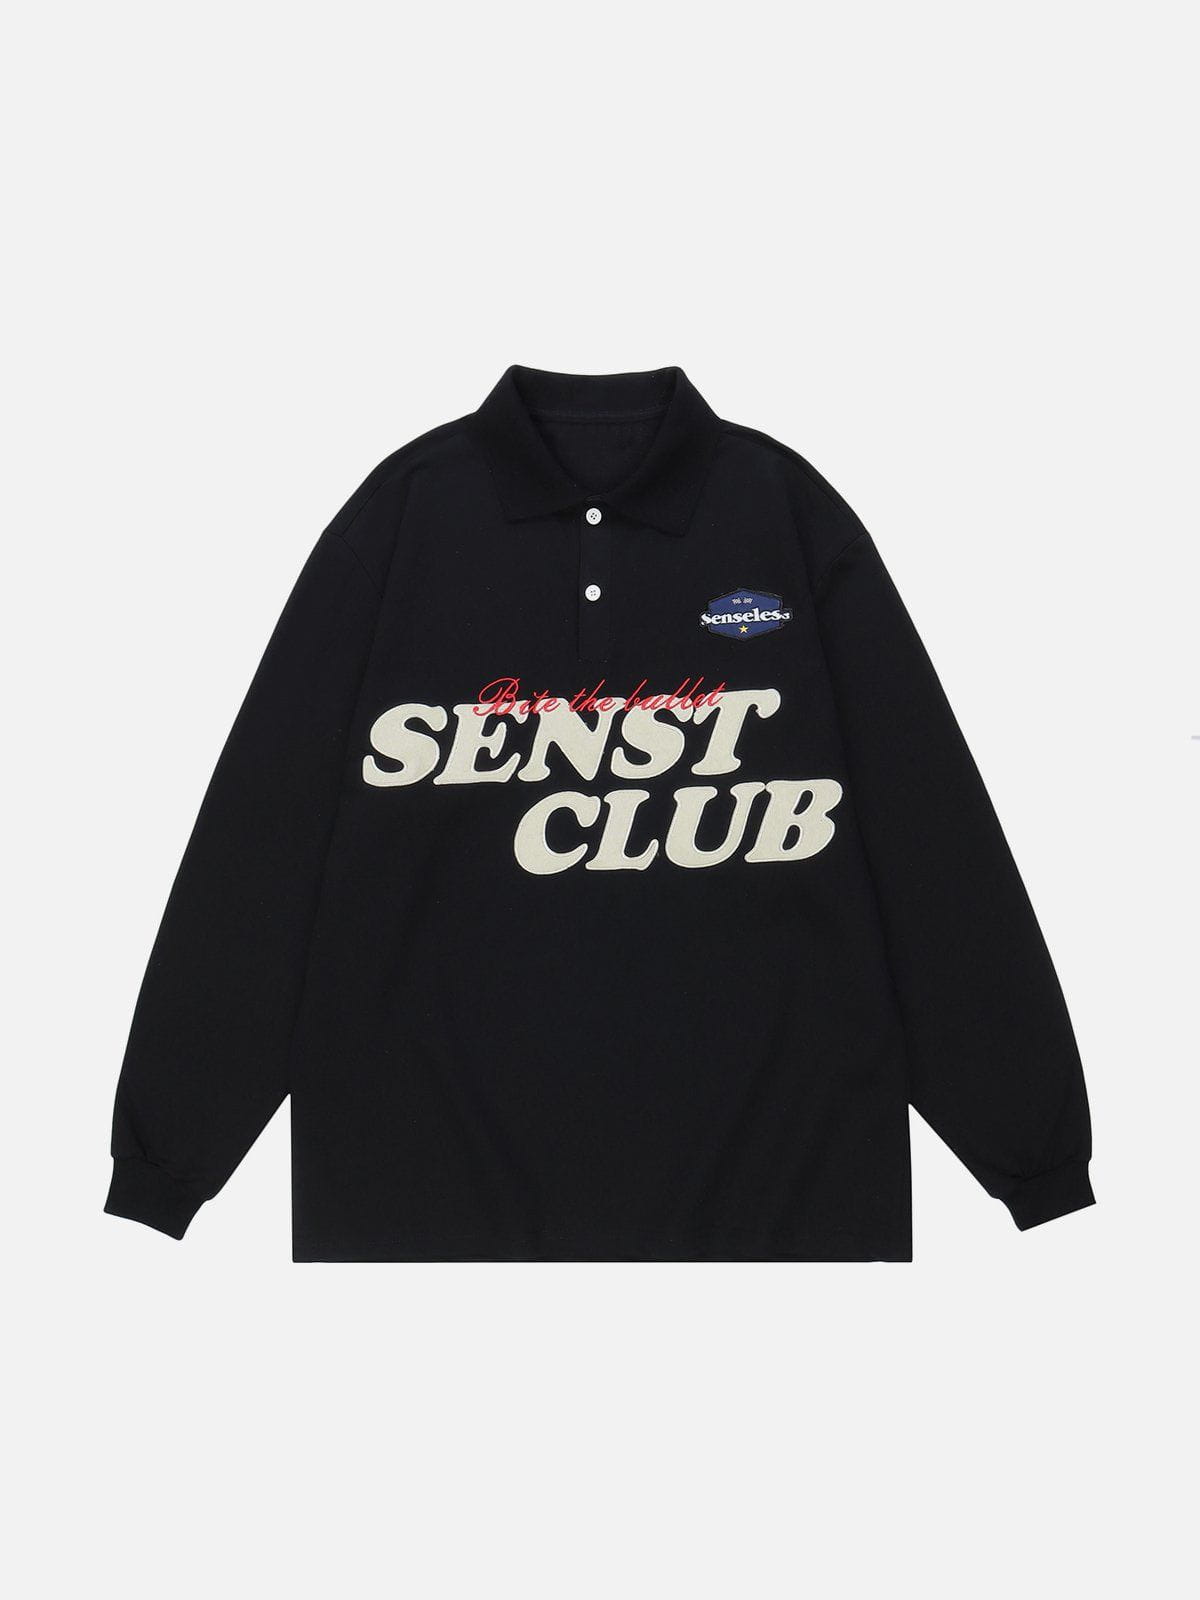 LUXENFY™ - "SENST CLUB" Print Polo Collar Sweatshirt luxenfy.com